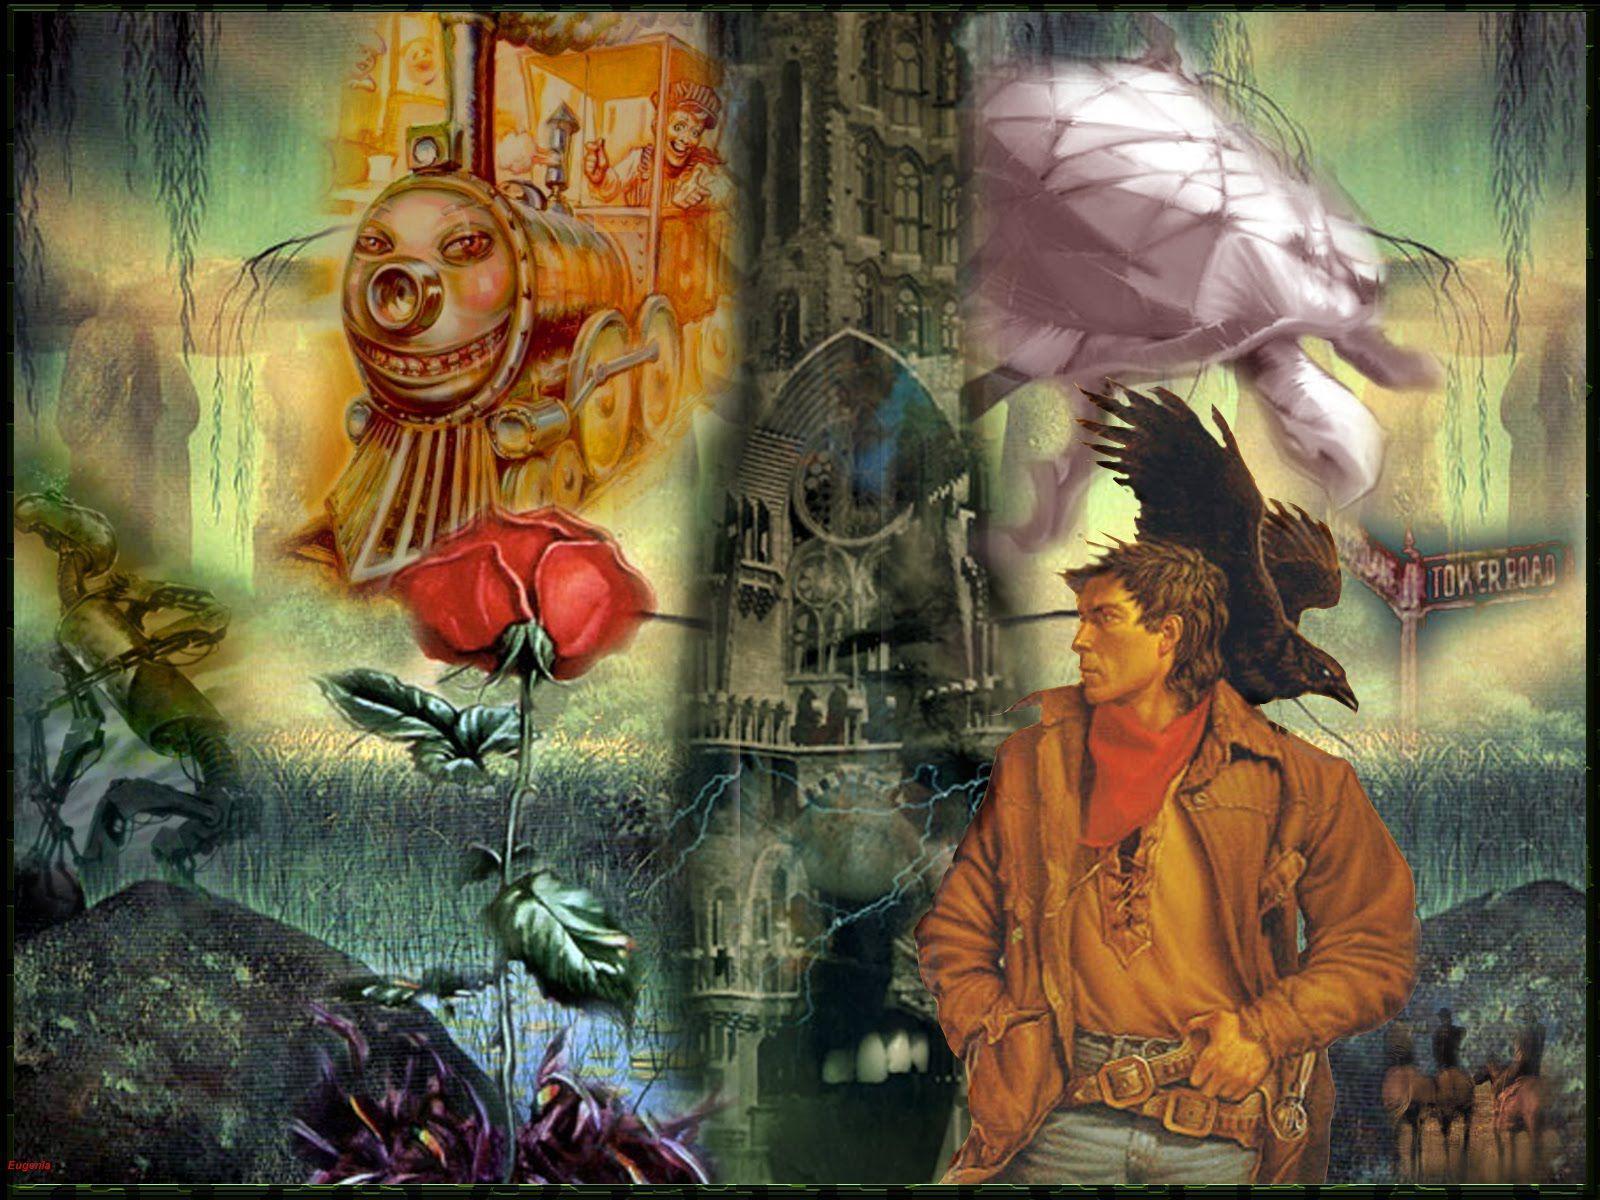 Stephen King Wallpaper, Image, Wallpaper of Stephen King in 100